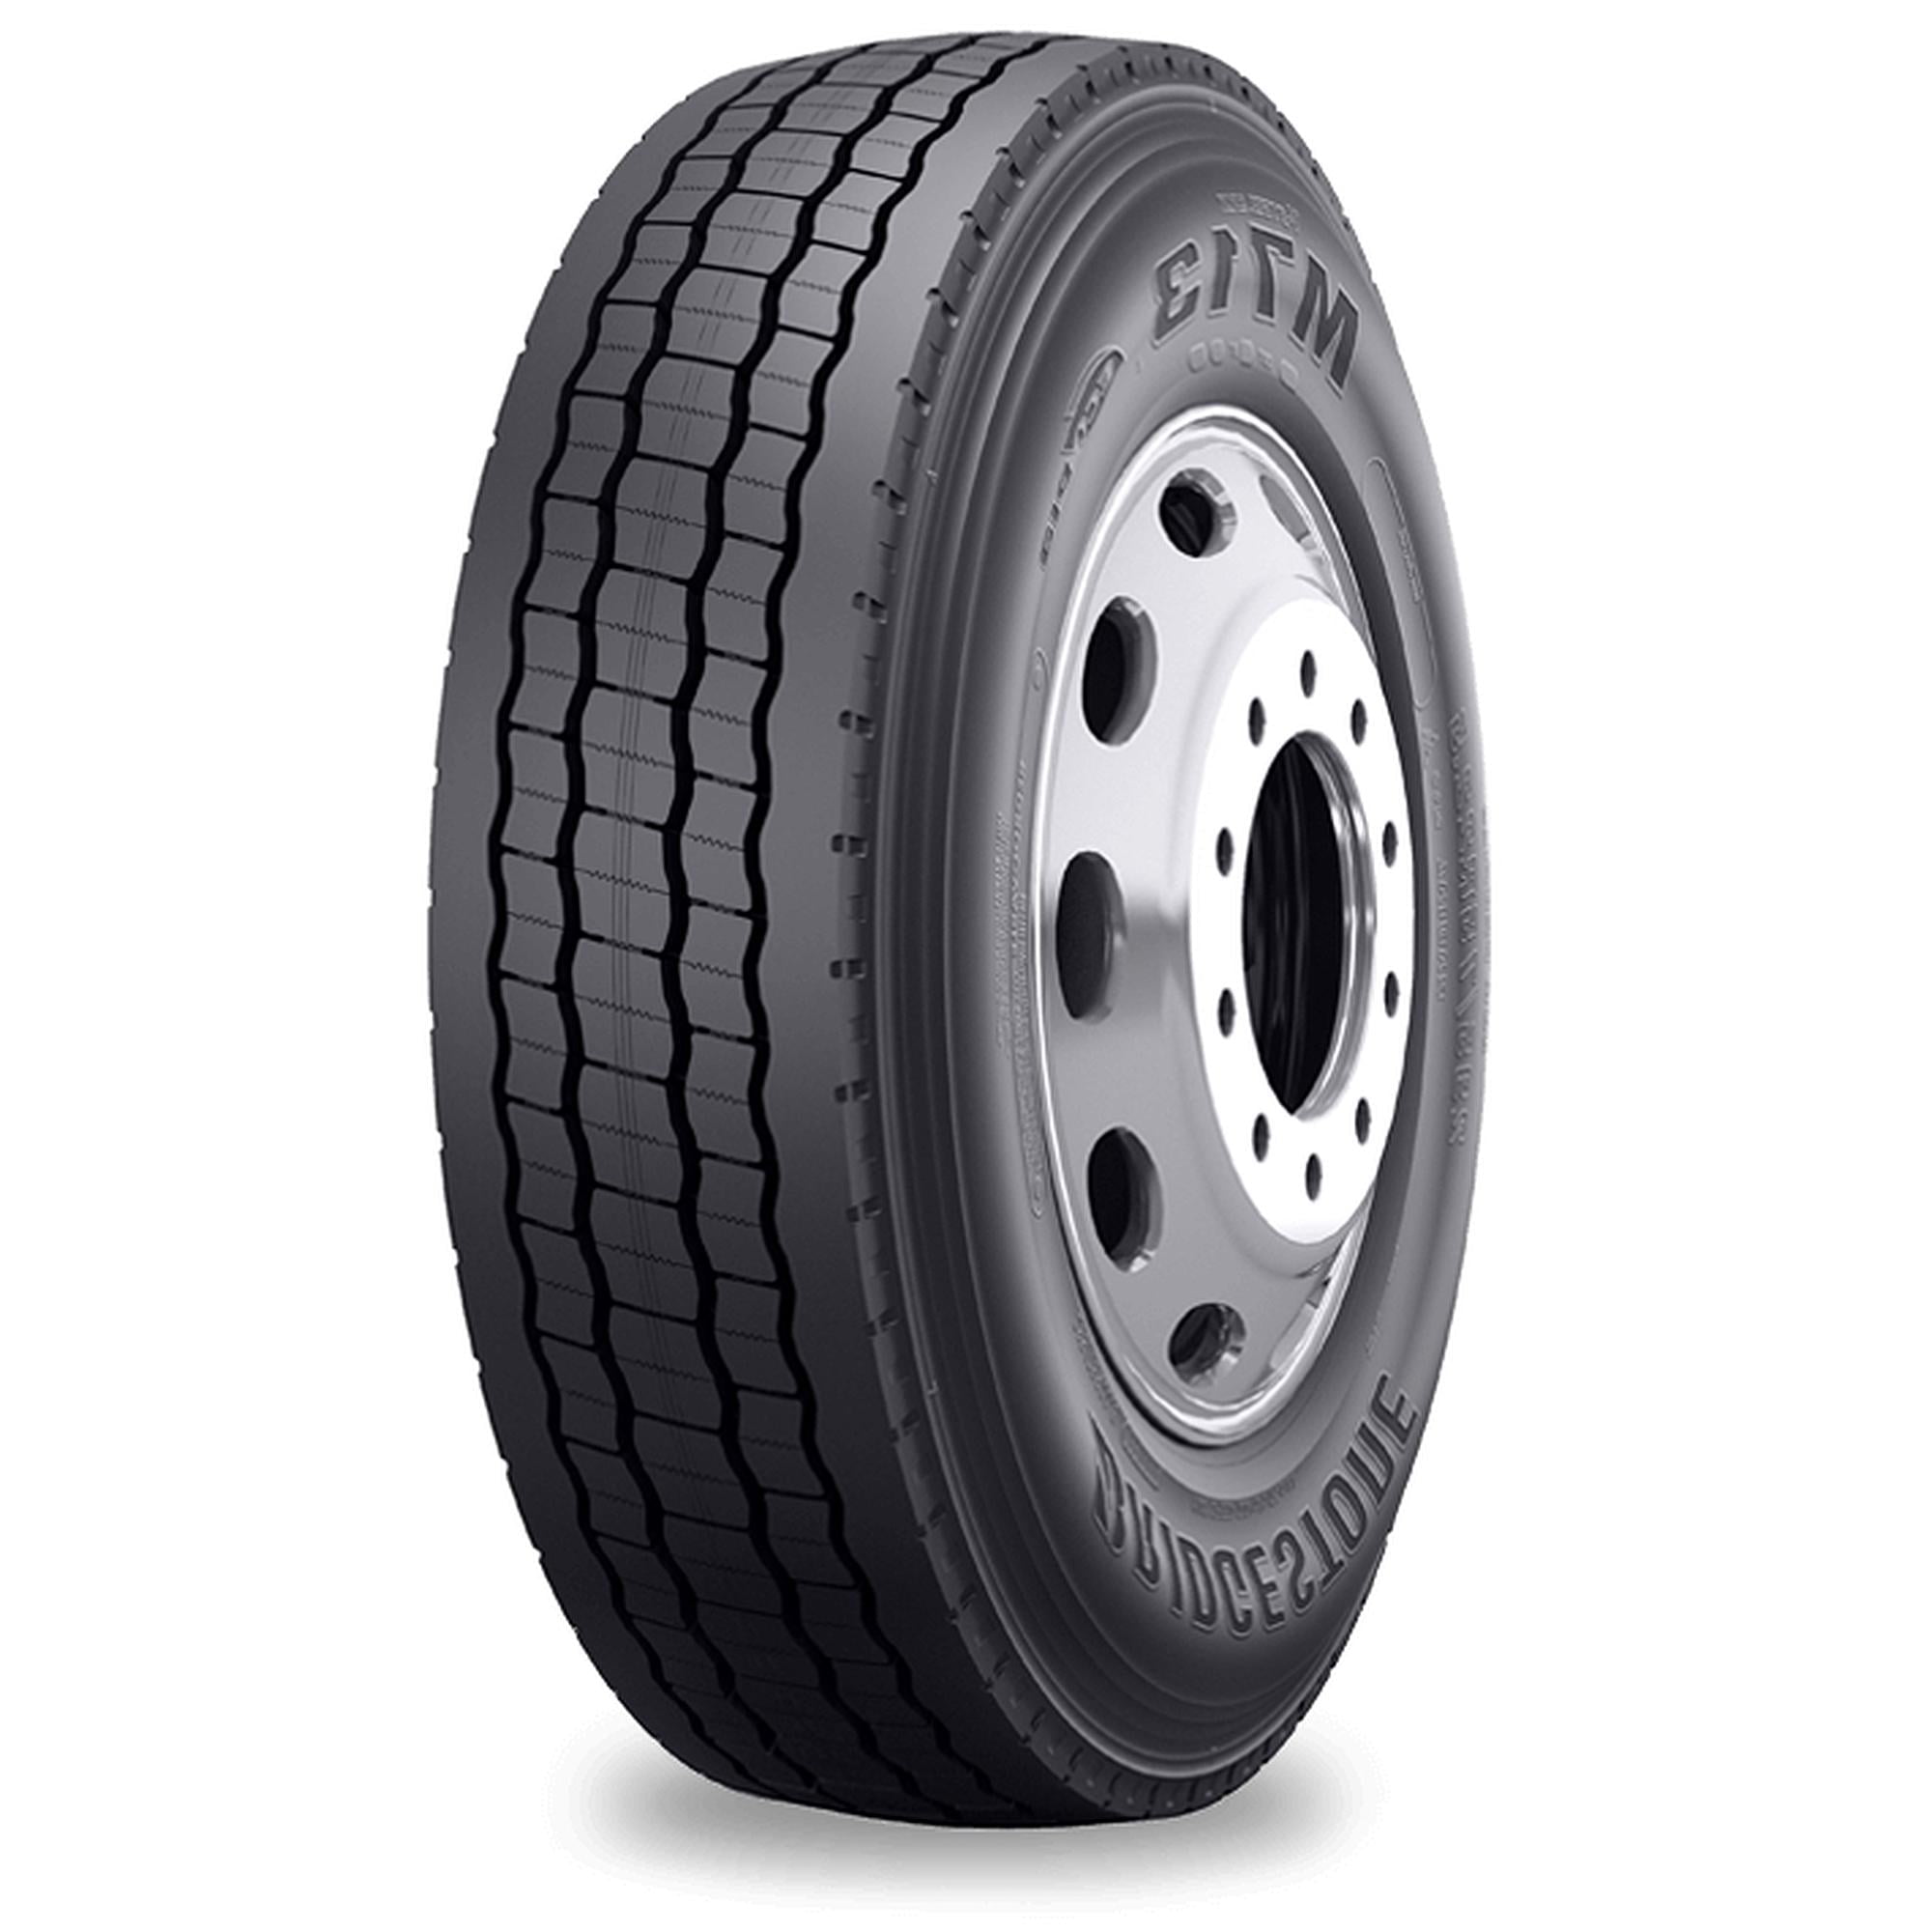 Bridgestone M713 Ecopia 11R22.5 144/142L G Commercial Tire